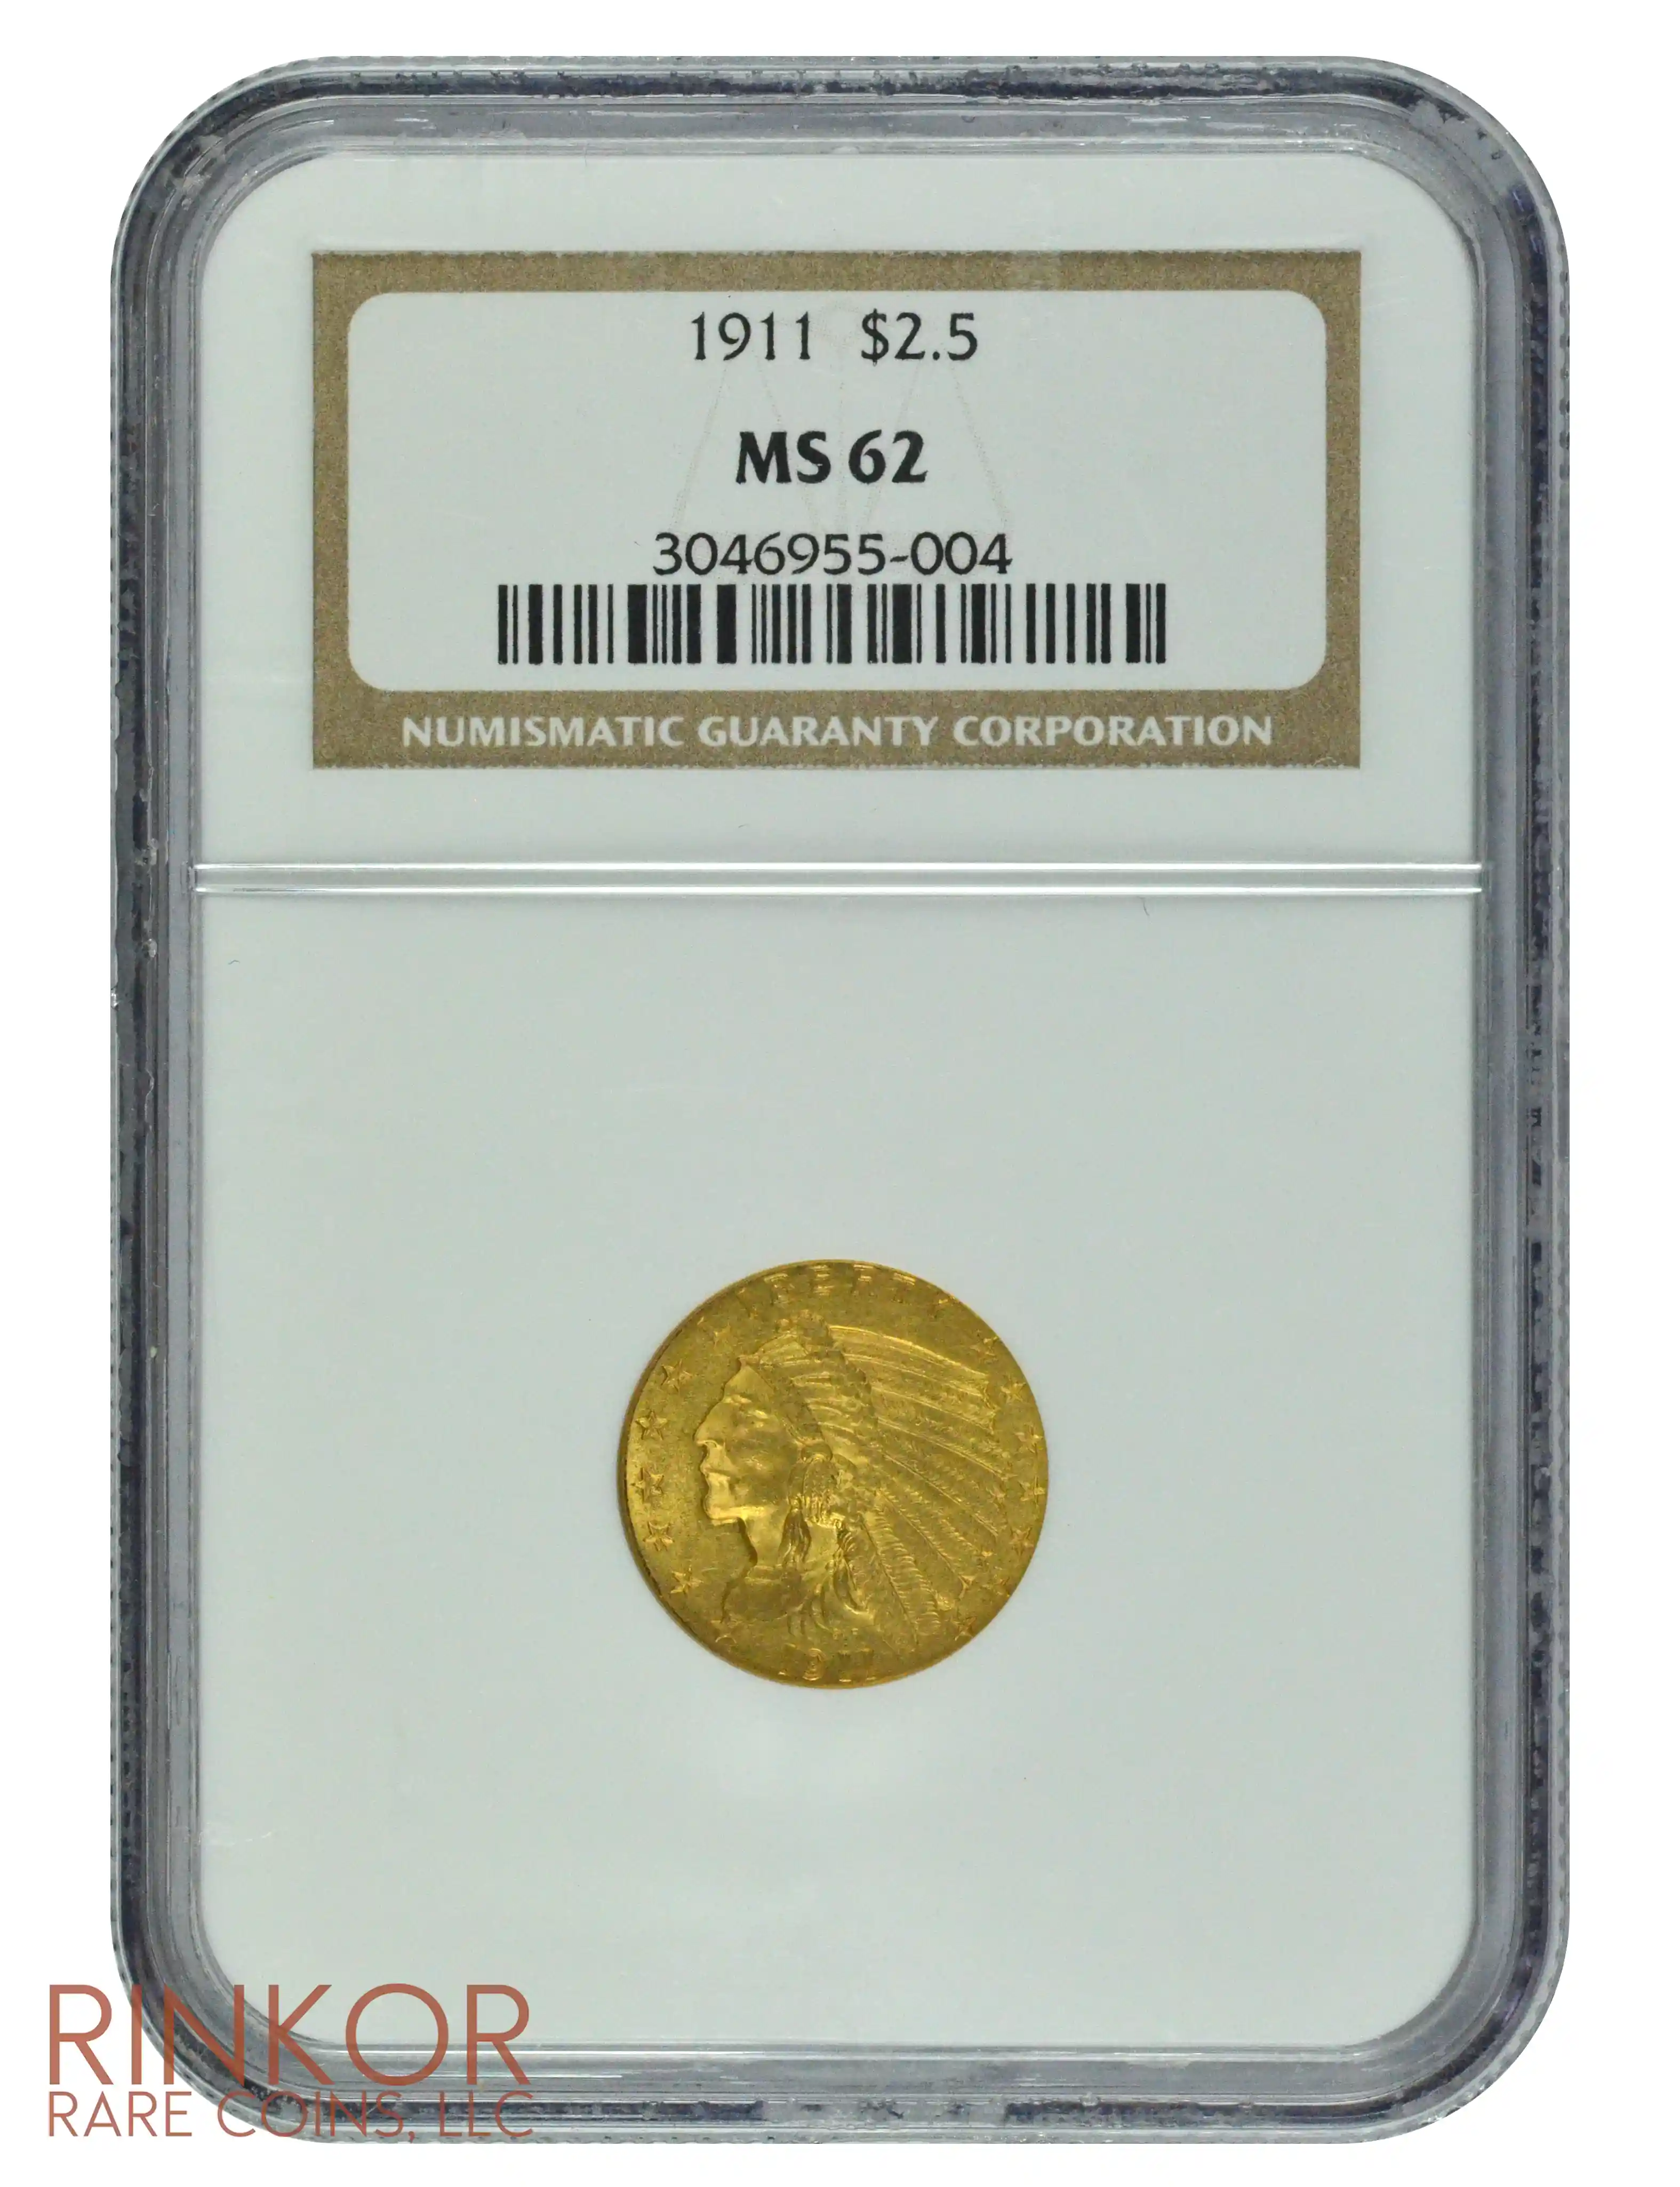 1911 $2.50 Indian Head NGC MS 62 